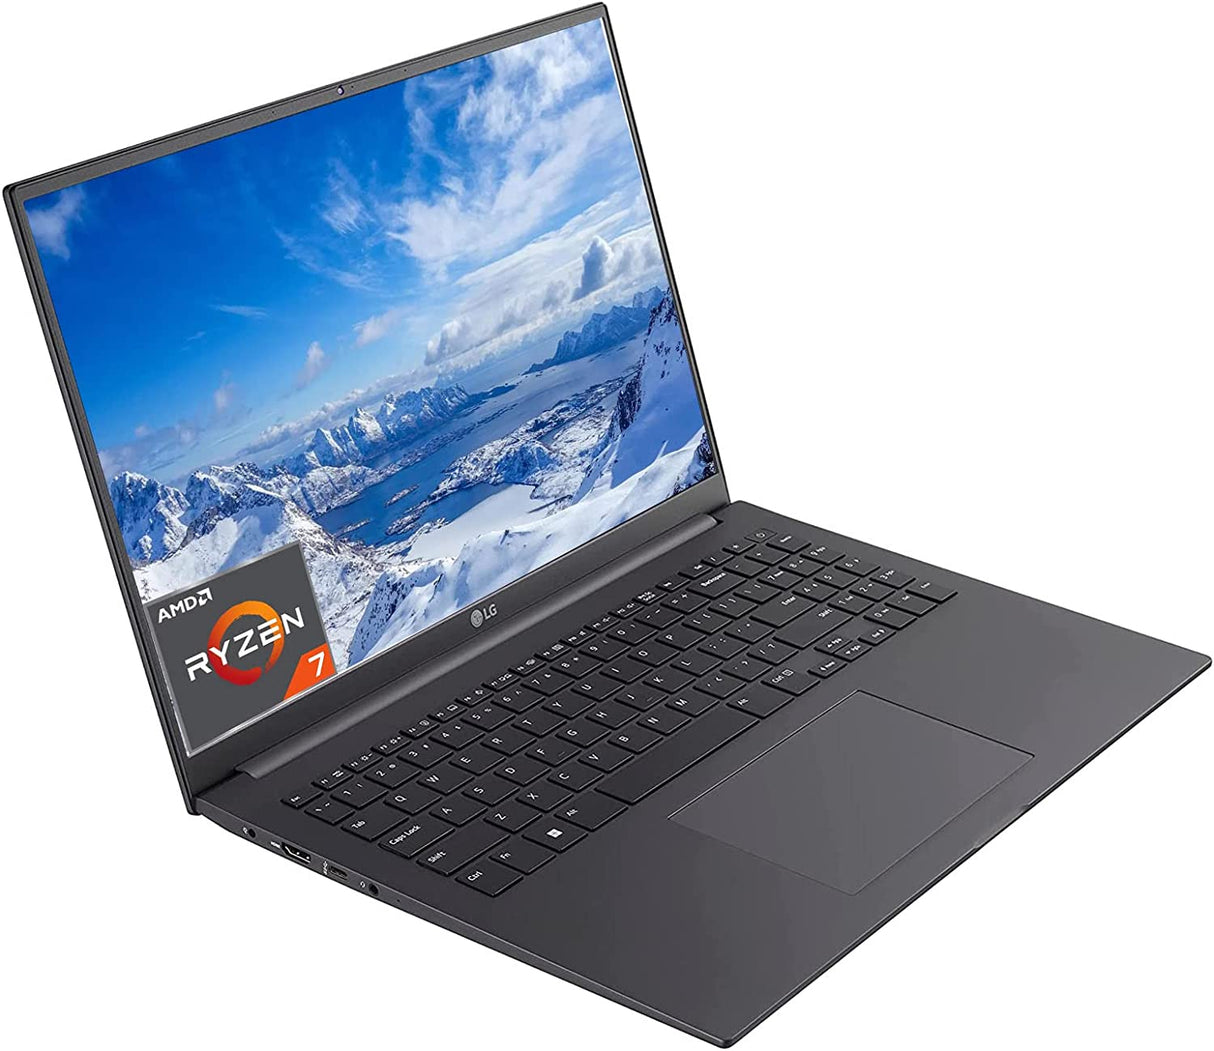 LG 2023 UltraPC Thin Slim Lightweight Laptop, 16 Inch WUXGA 1920x1200 Anti-Glare IPS Display, Ryzen 7 5825U 8Cores Up to 4.5GHz, 16GB RAM 1TB SSD, AMD Radeon, Win11, Gray +CUE Accessories 16GB RAM | 1TB SSD